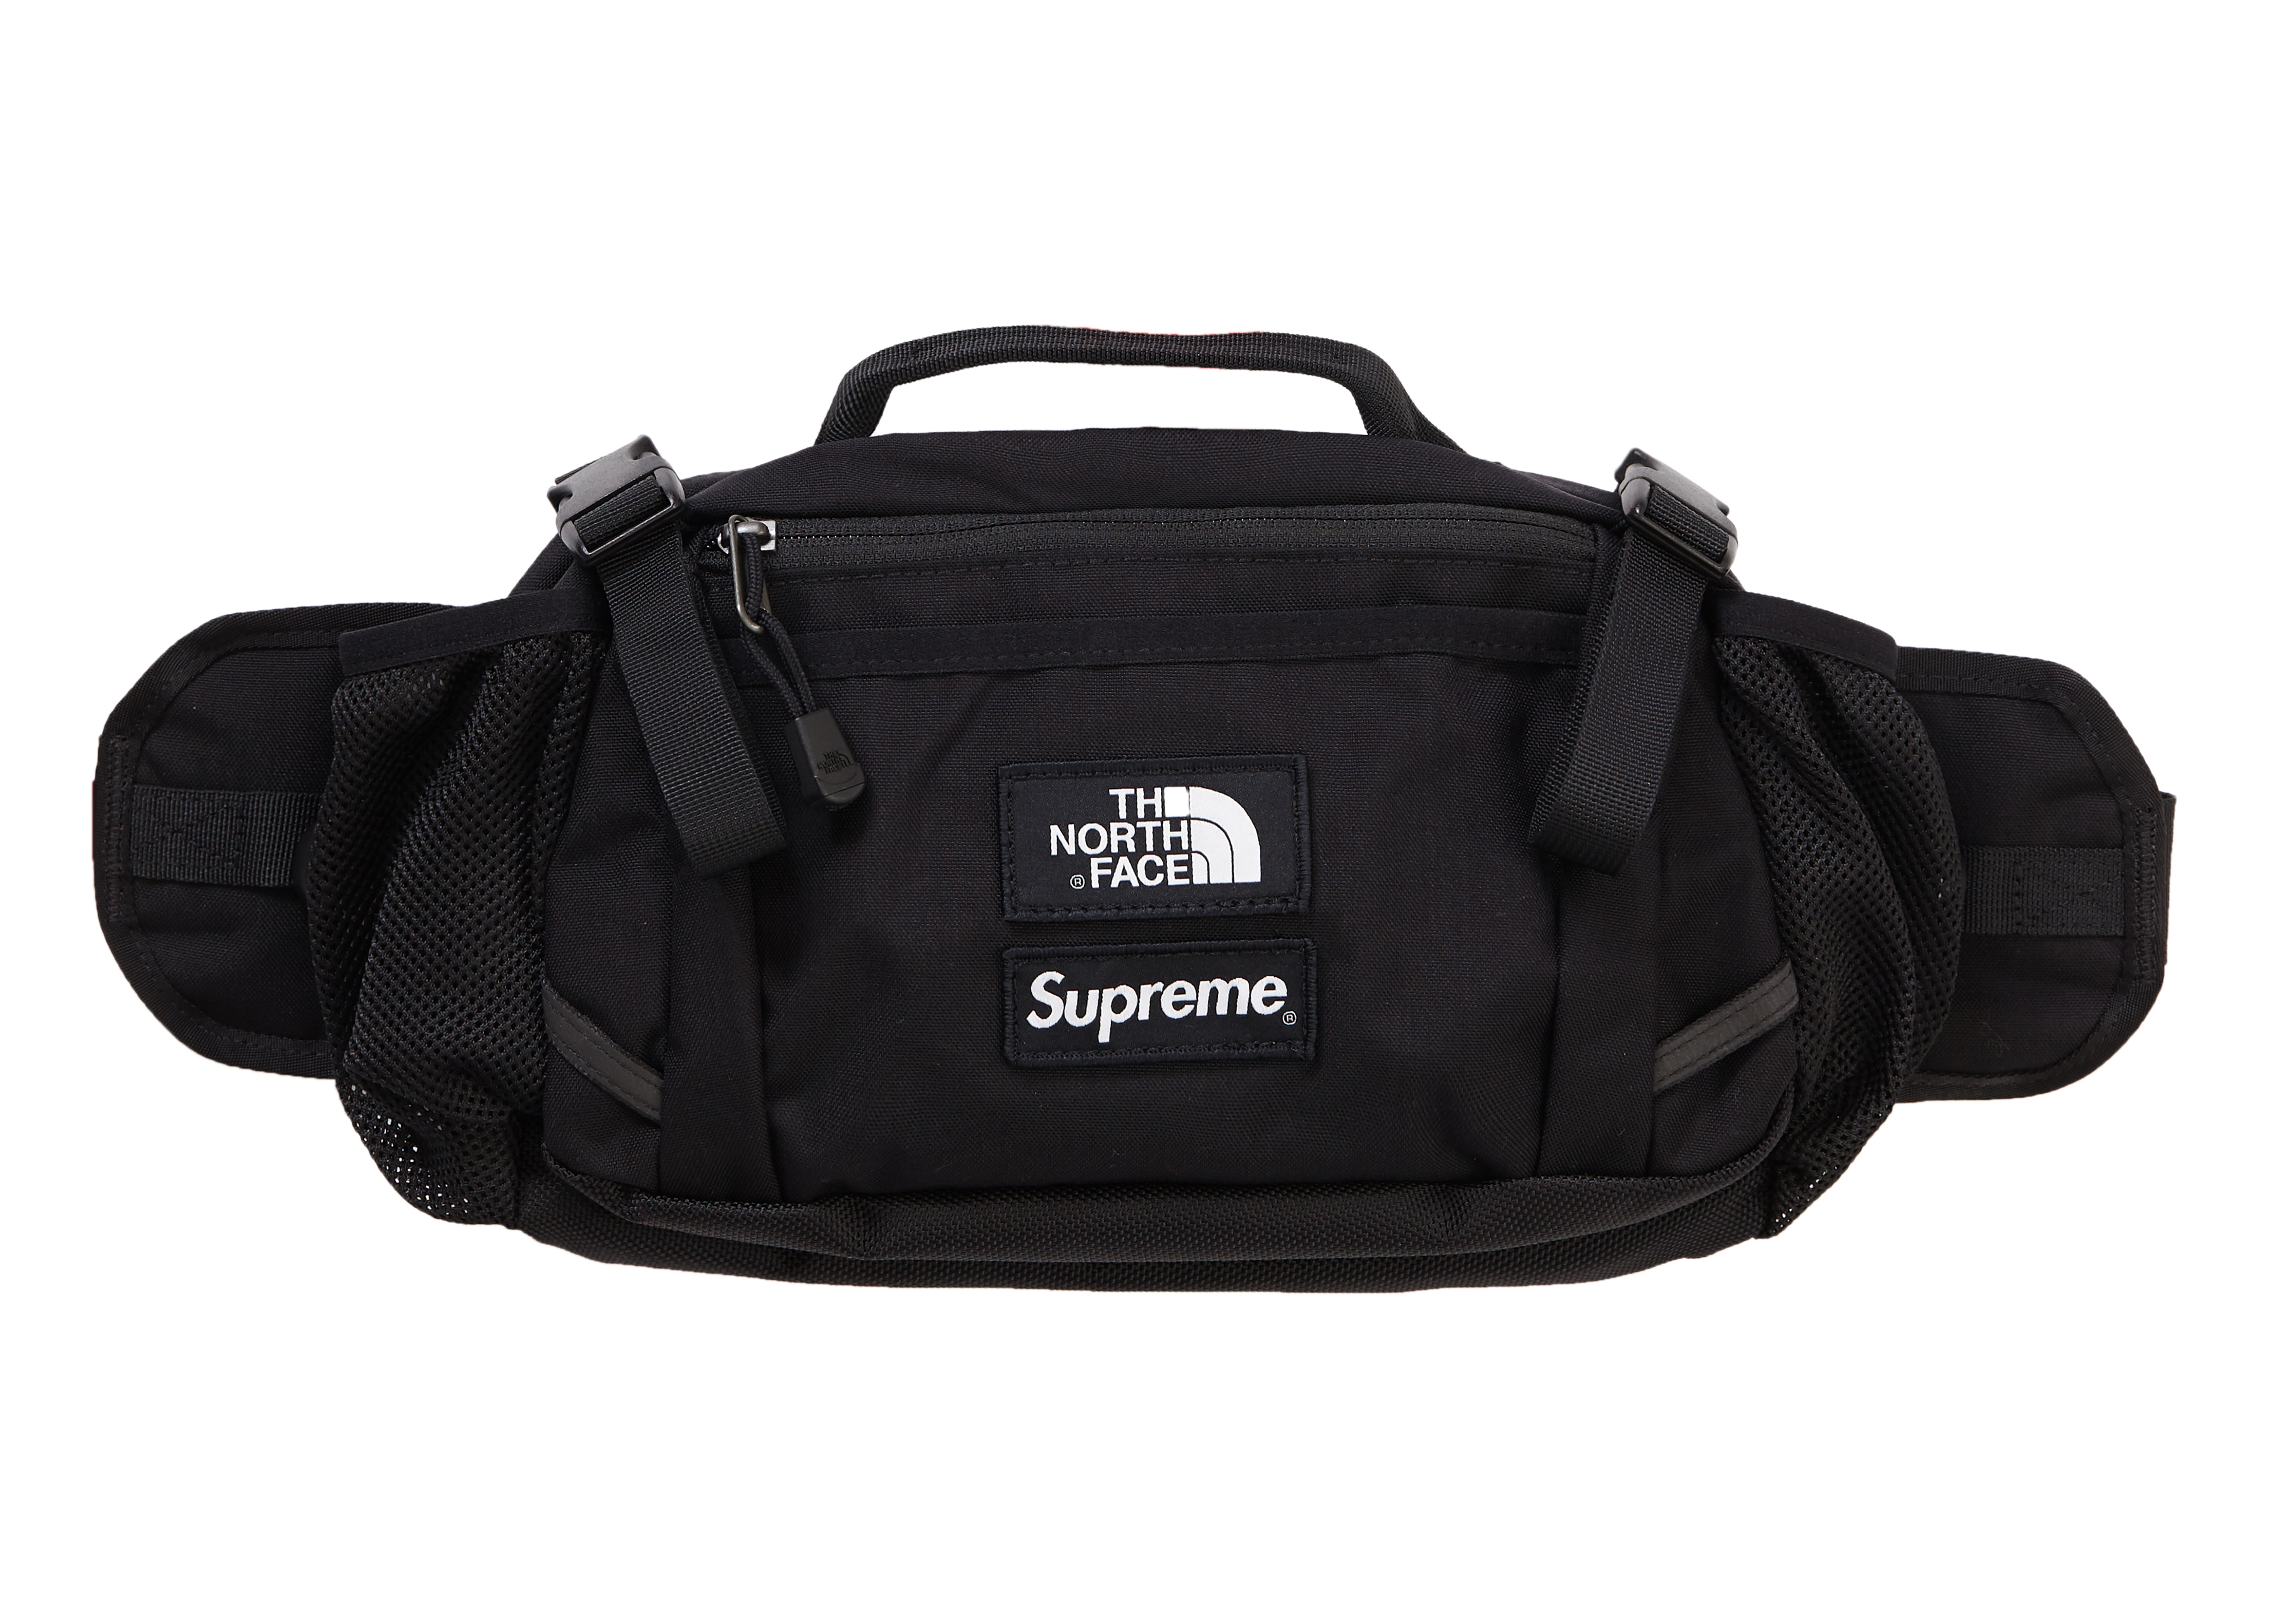 supreme north face waist bag 2018